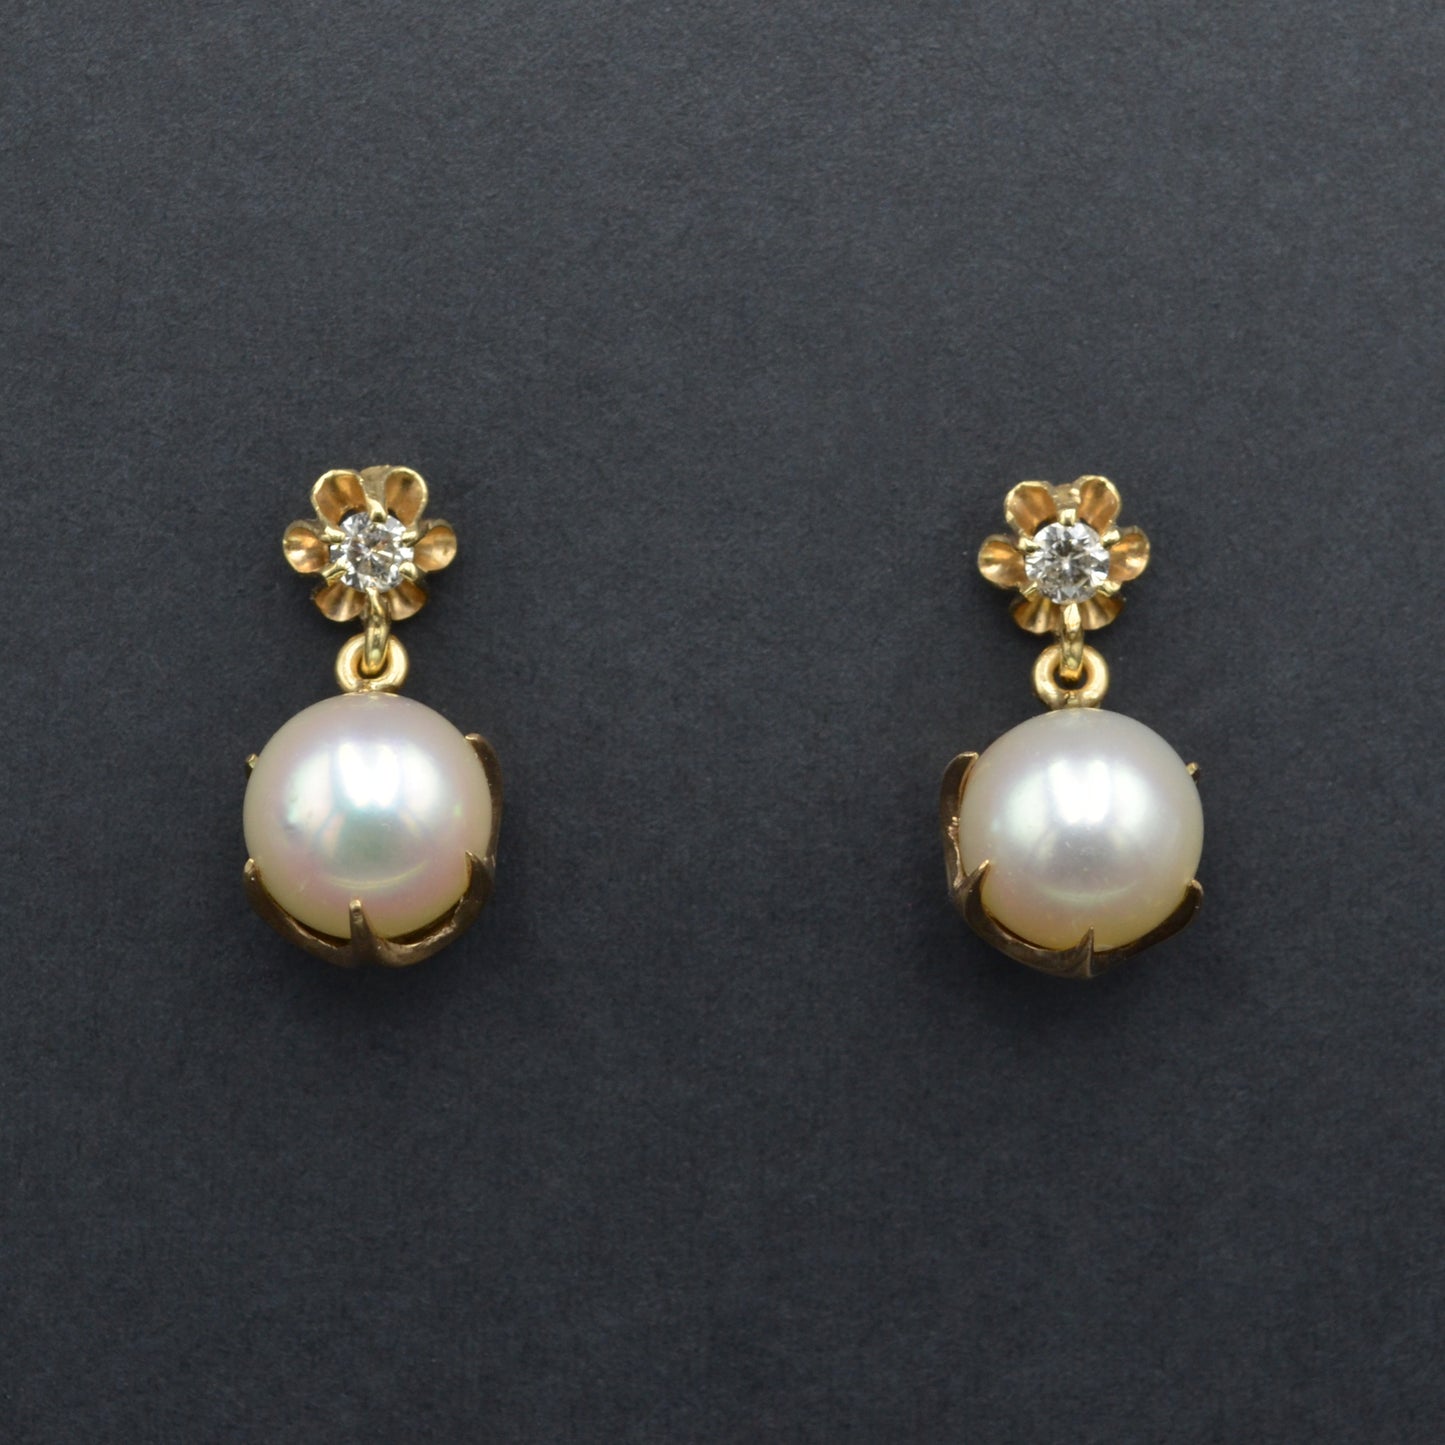 Pearl and Diamond Earrings in 14 Karat Gold